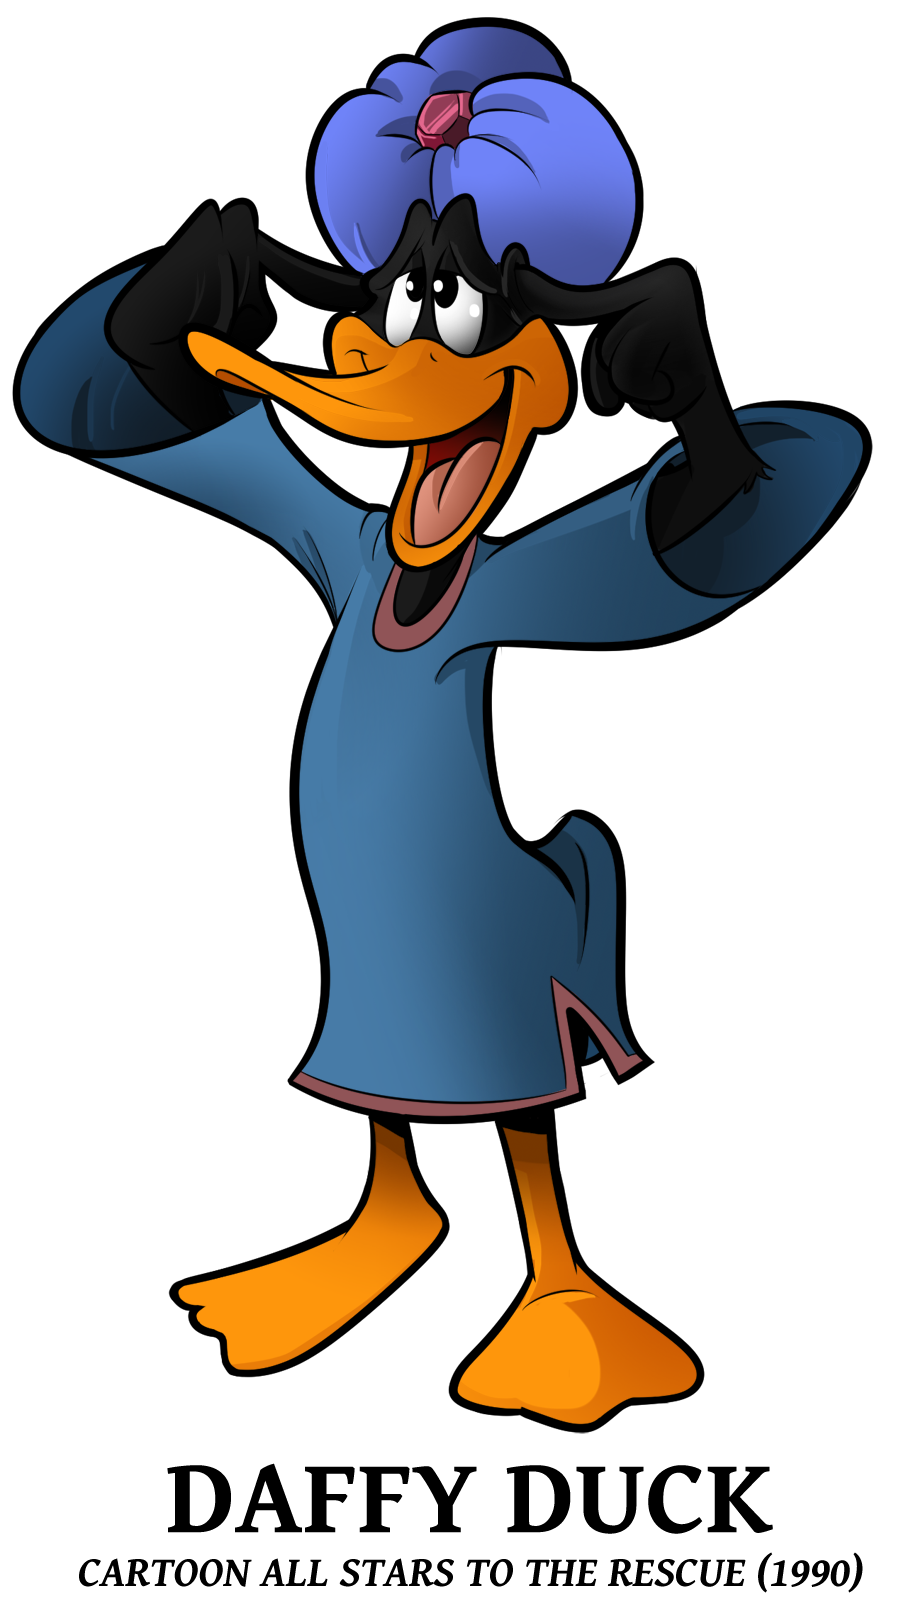 1990 - Daffy Duck